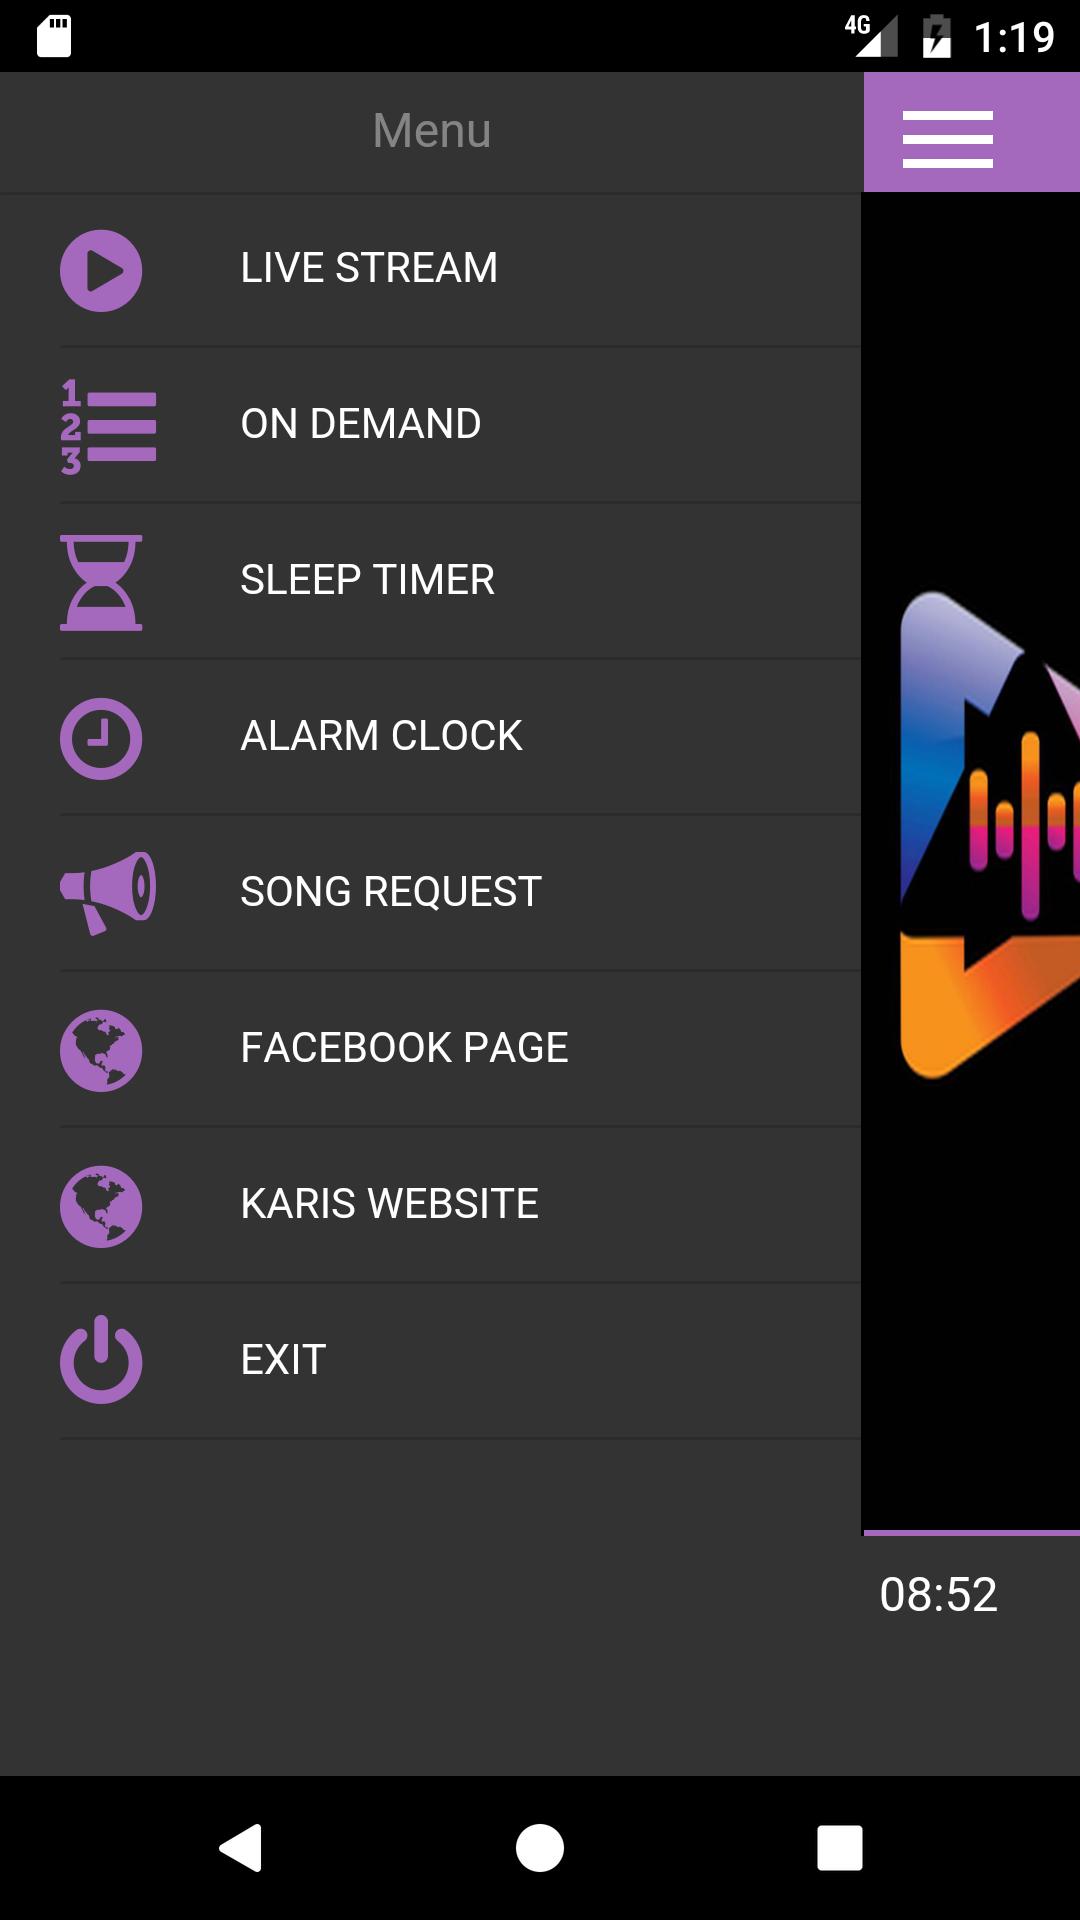 Karis Fm for Android - APK Download